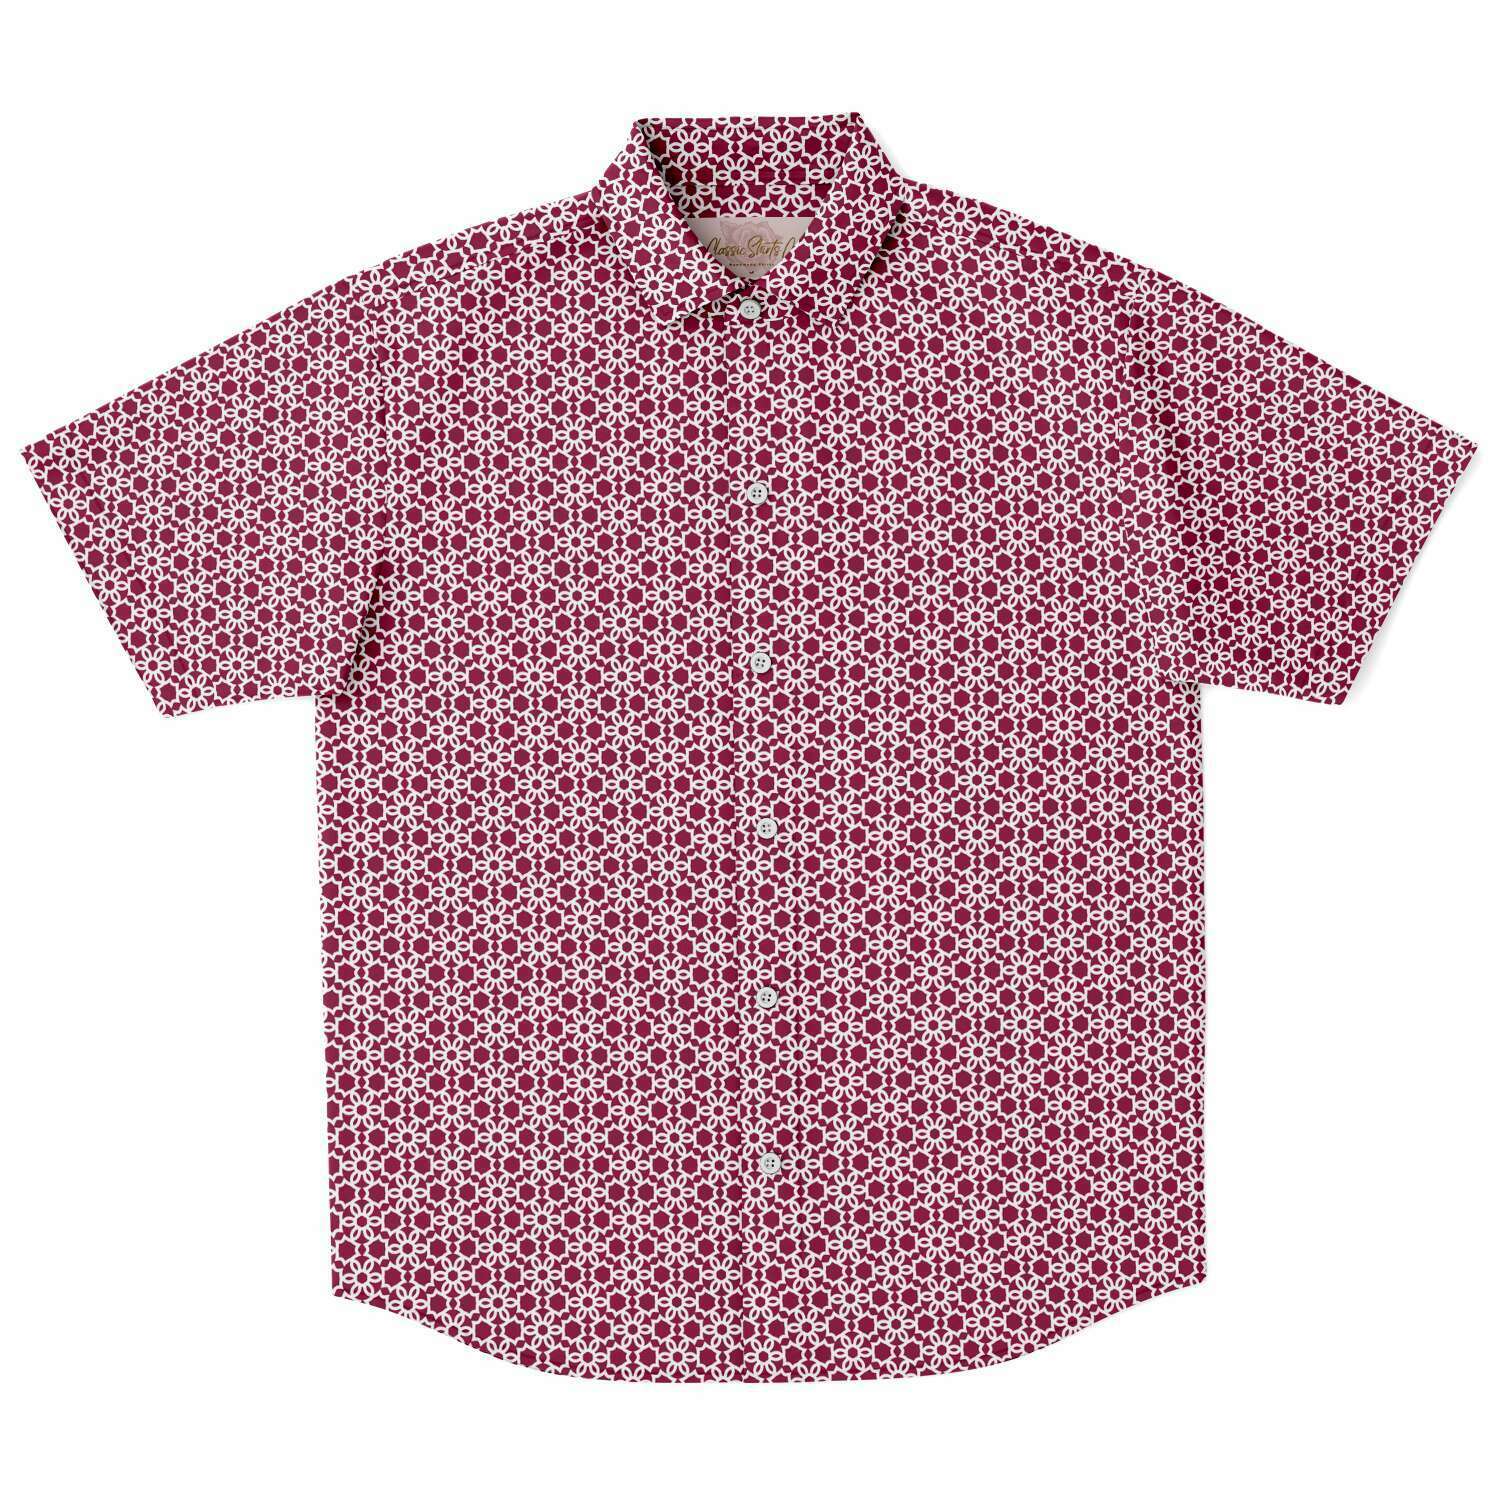 Blood Red Geometric Floral Print Men's Short Sleeve Button Down Shirt - kayzers